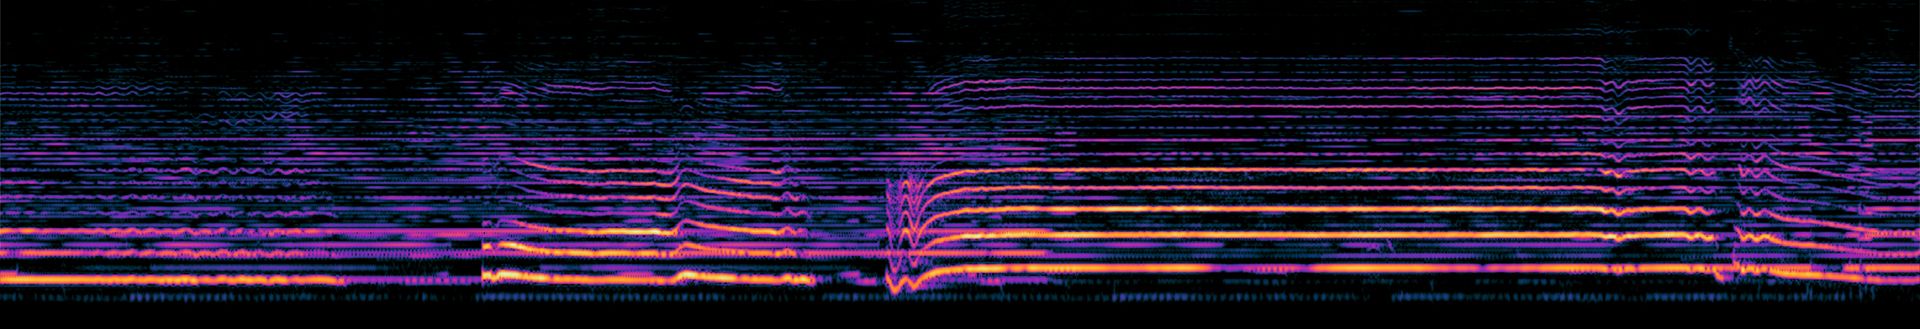 A spectrogram